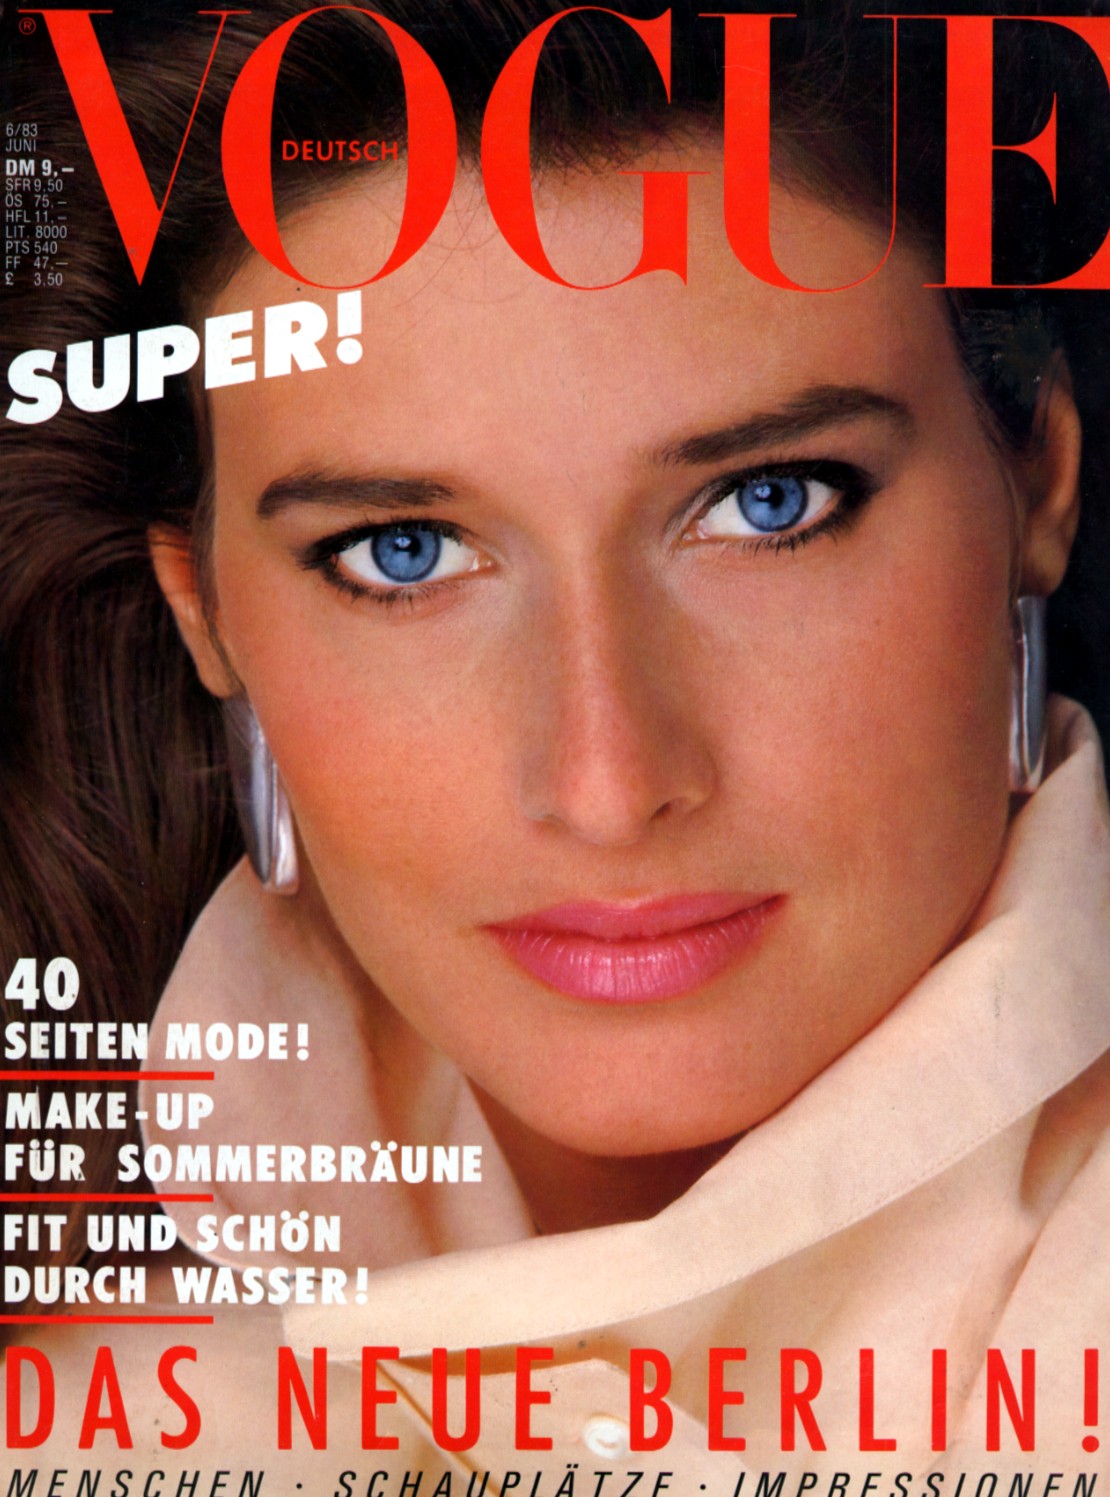 Vogue German 683